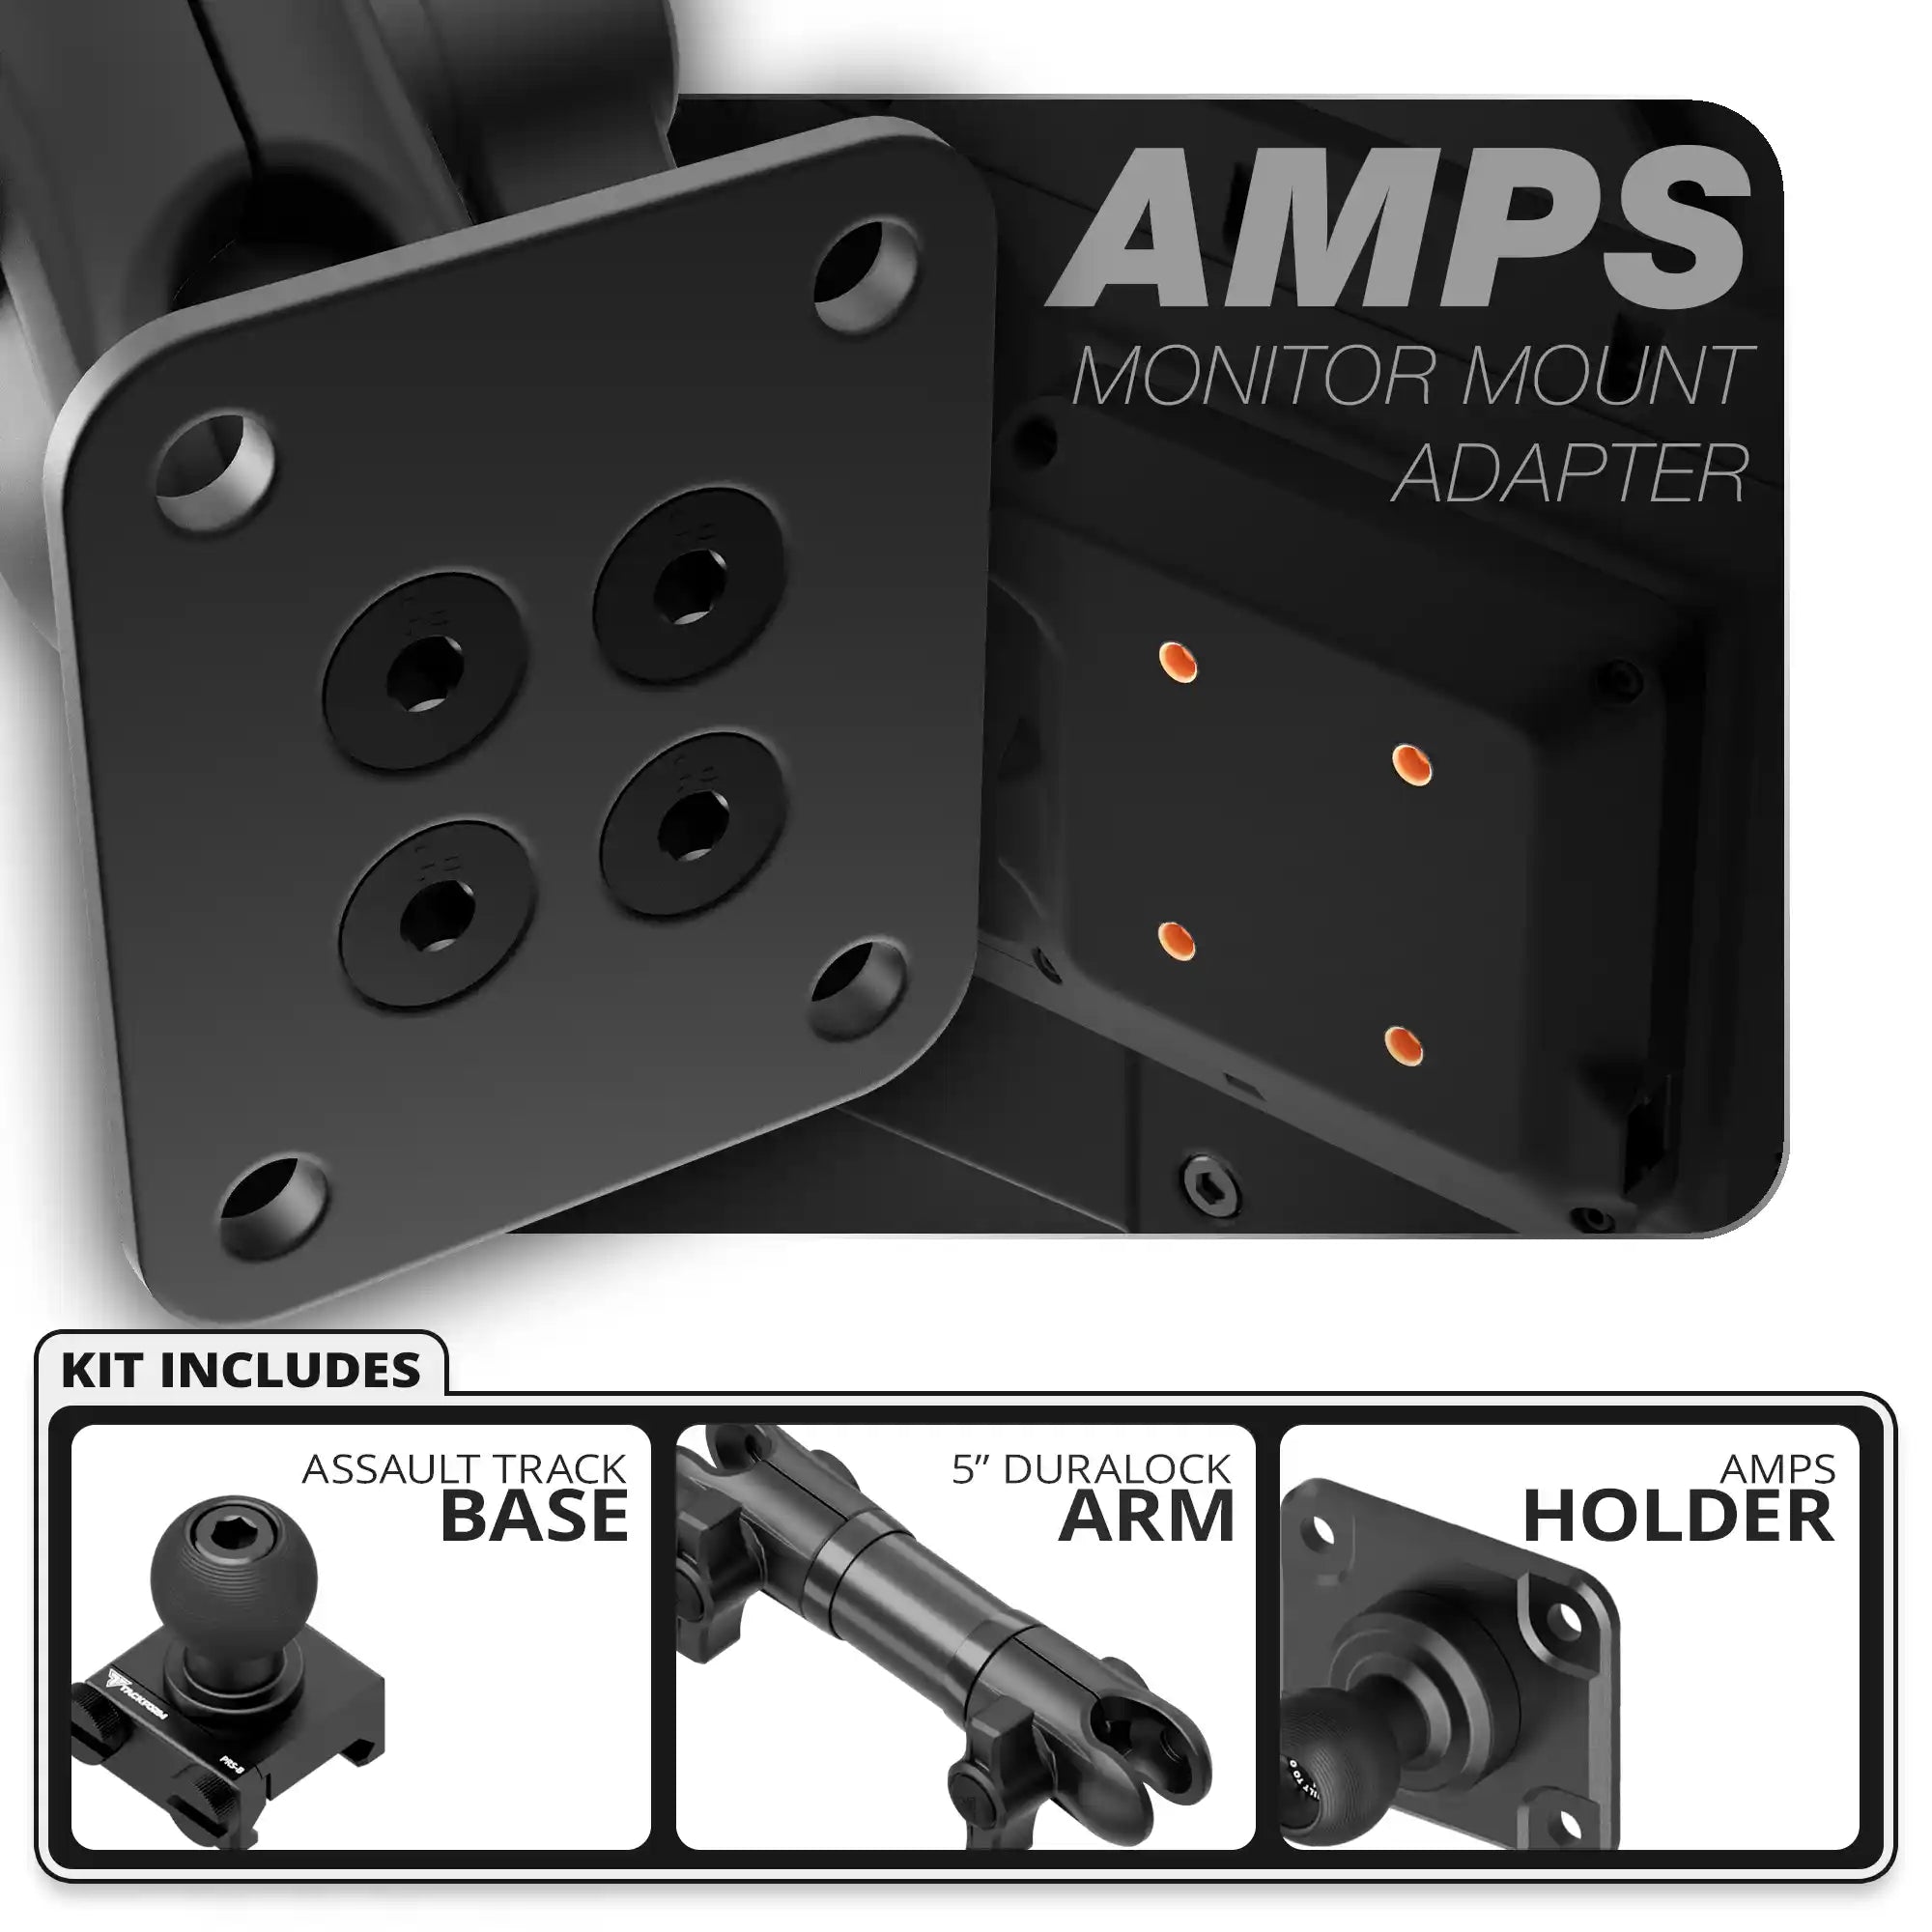 AMPS | Assault Track Base | 5" DuraLock Arm